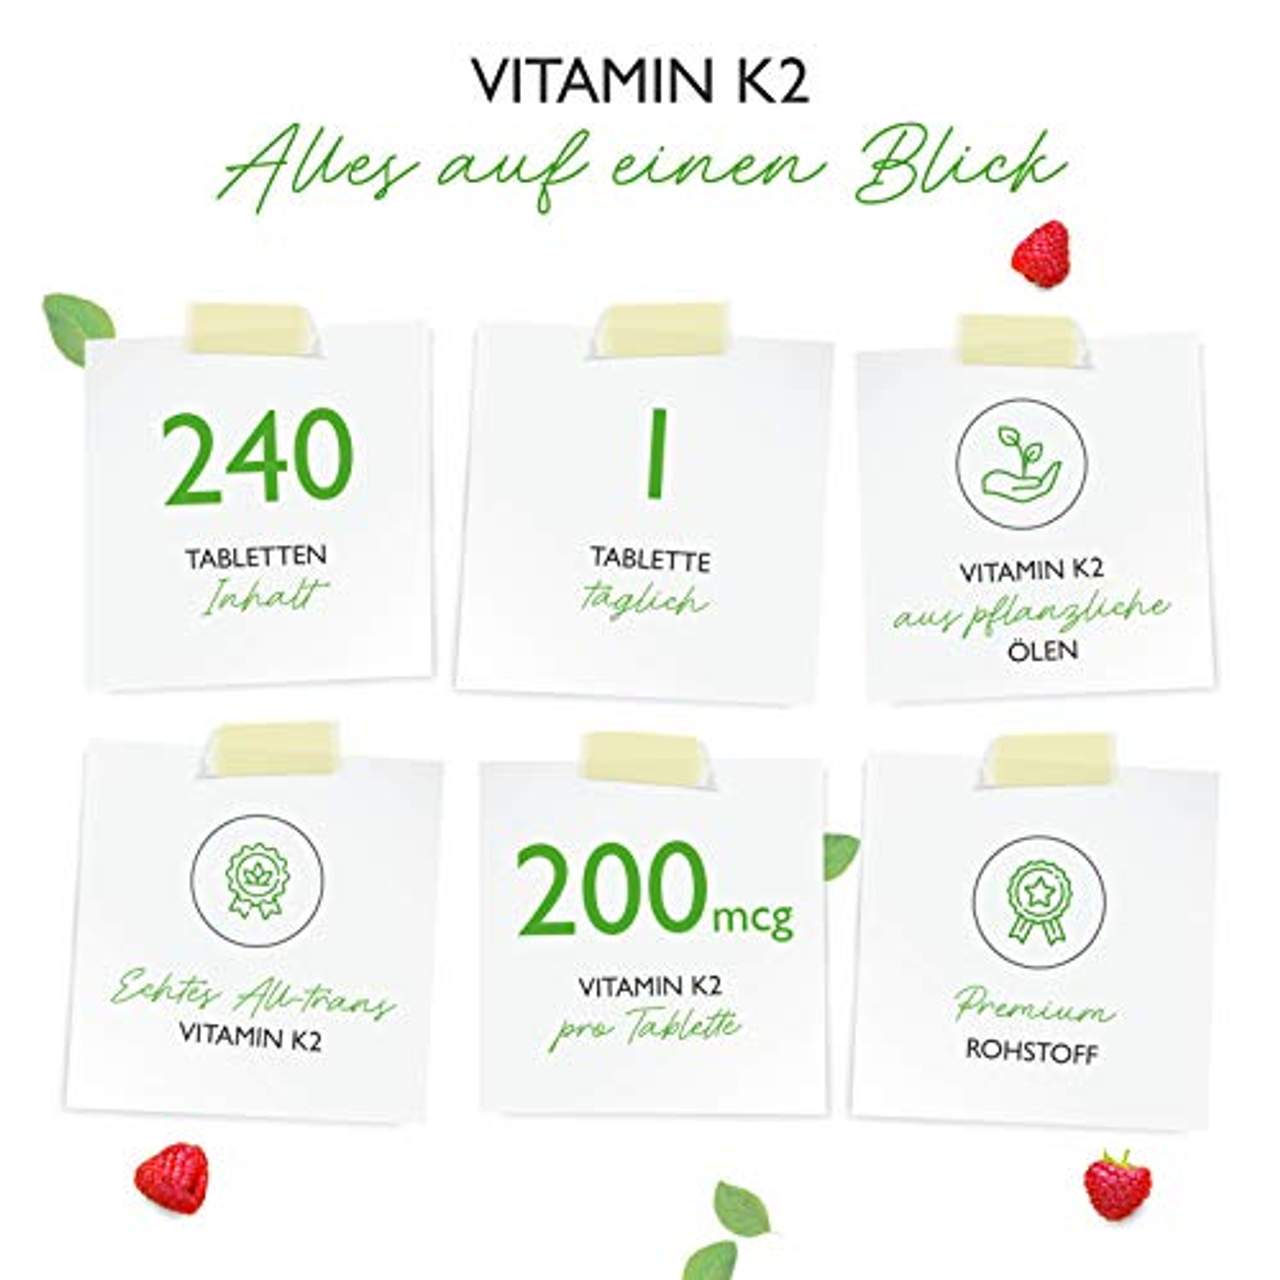 Vit4ever Vitamin K2 Hochdosiert